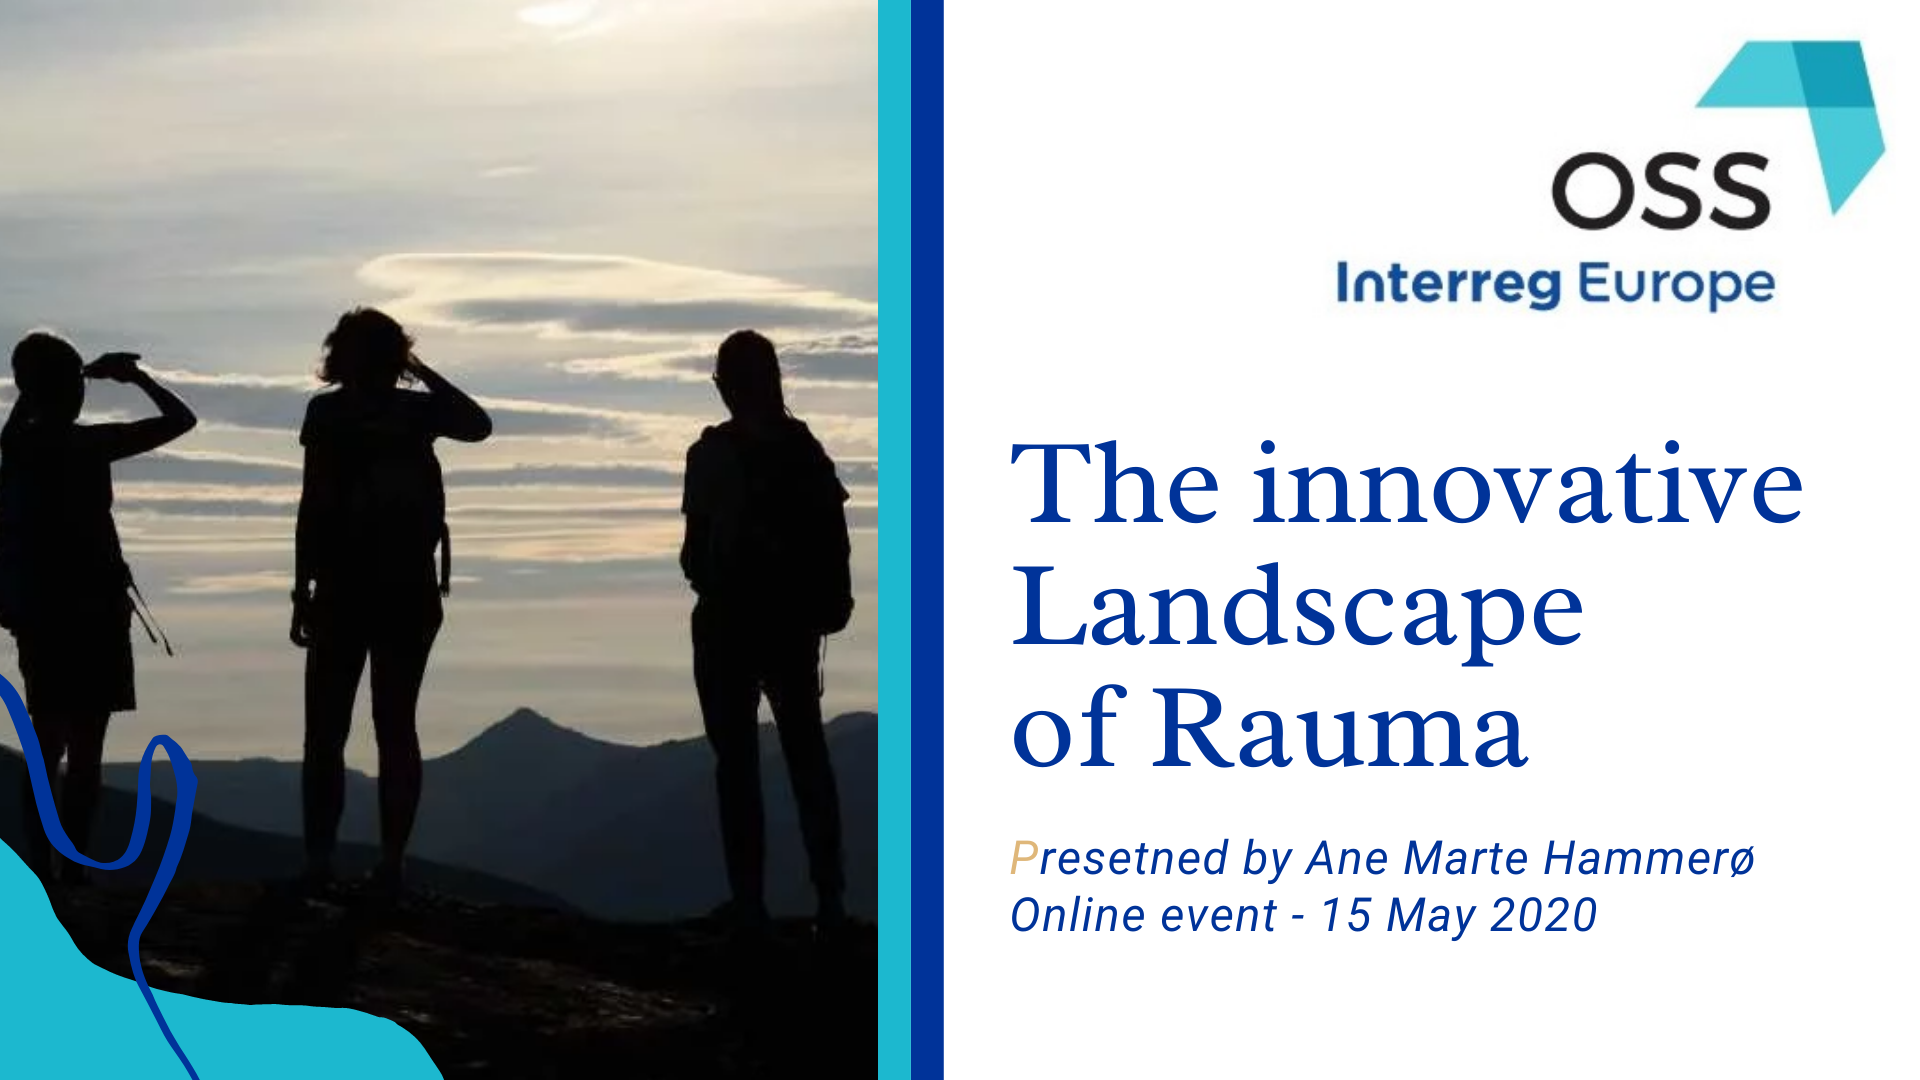 The innovative landscape of Rauma